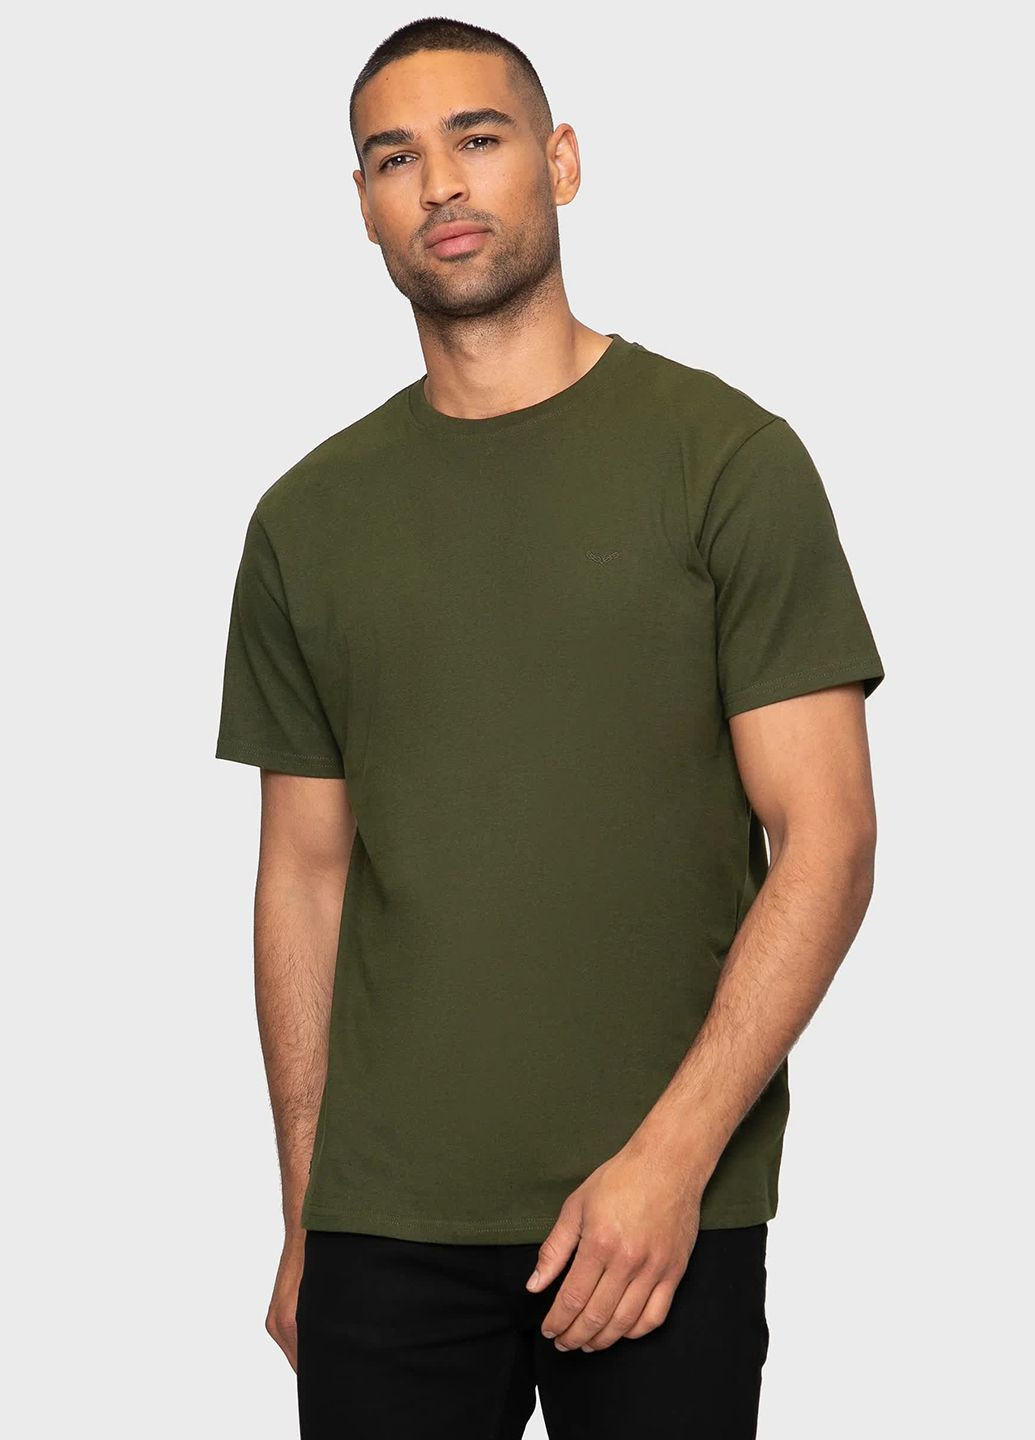 Хаки (оливковая) футболка из хлопка Threadbare